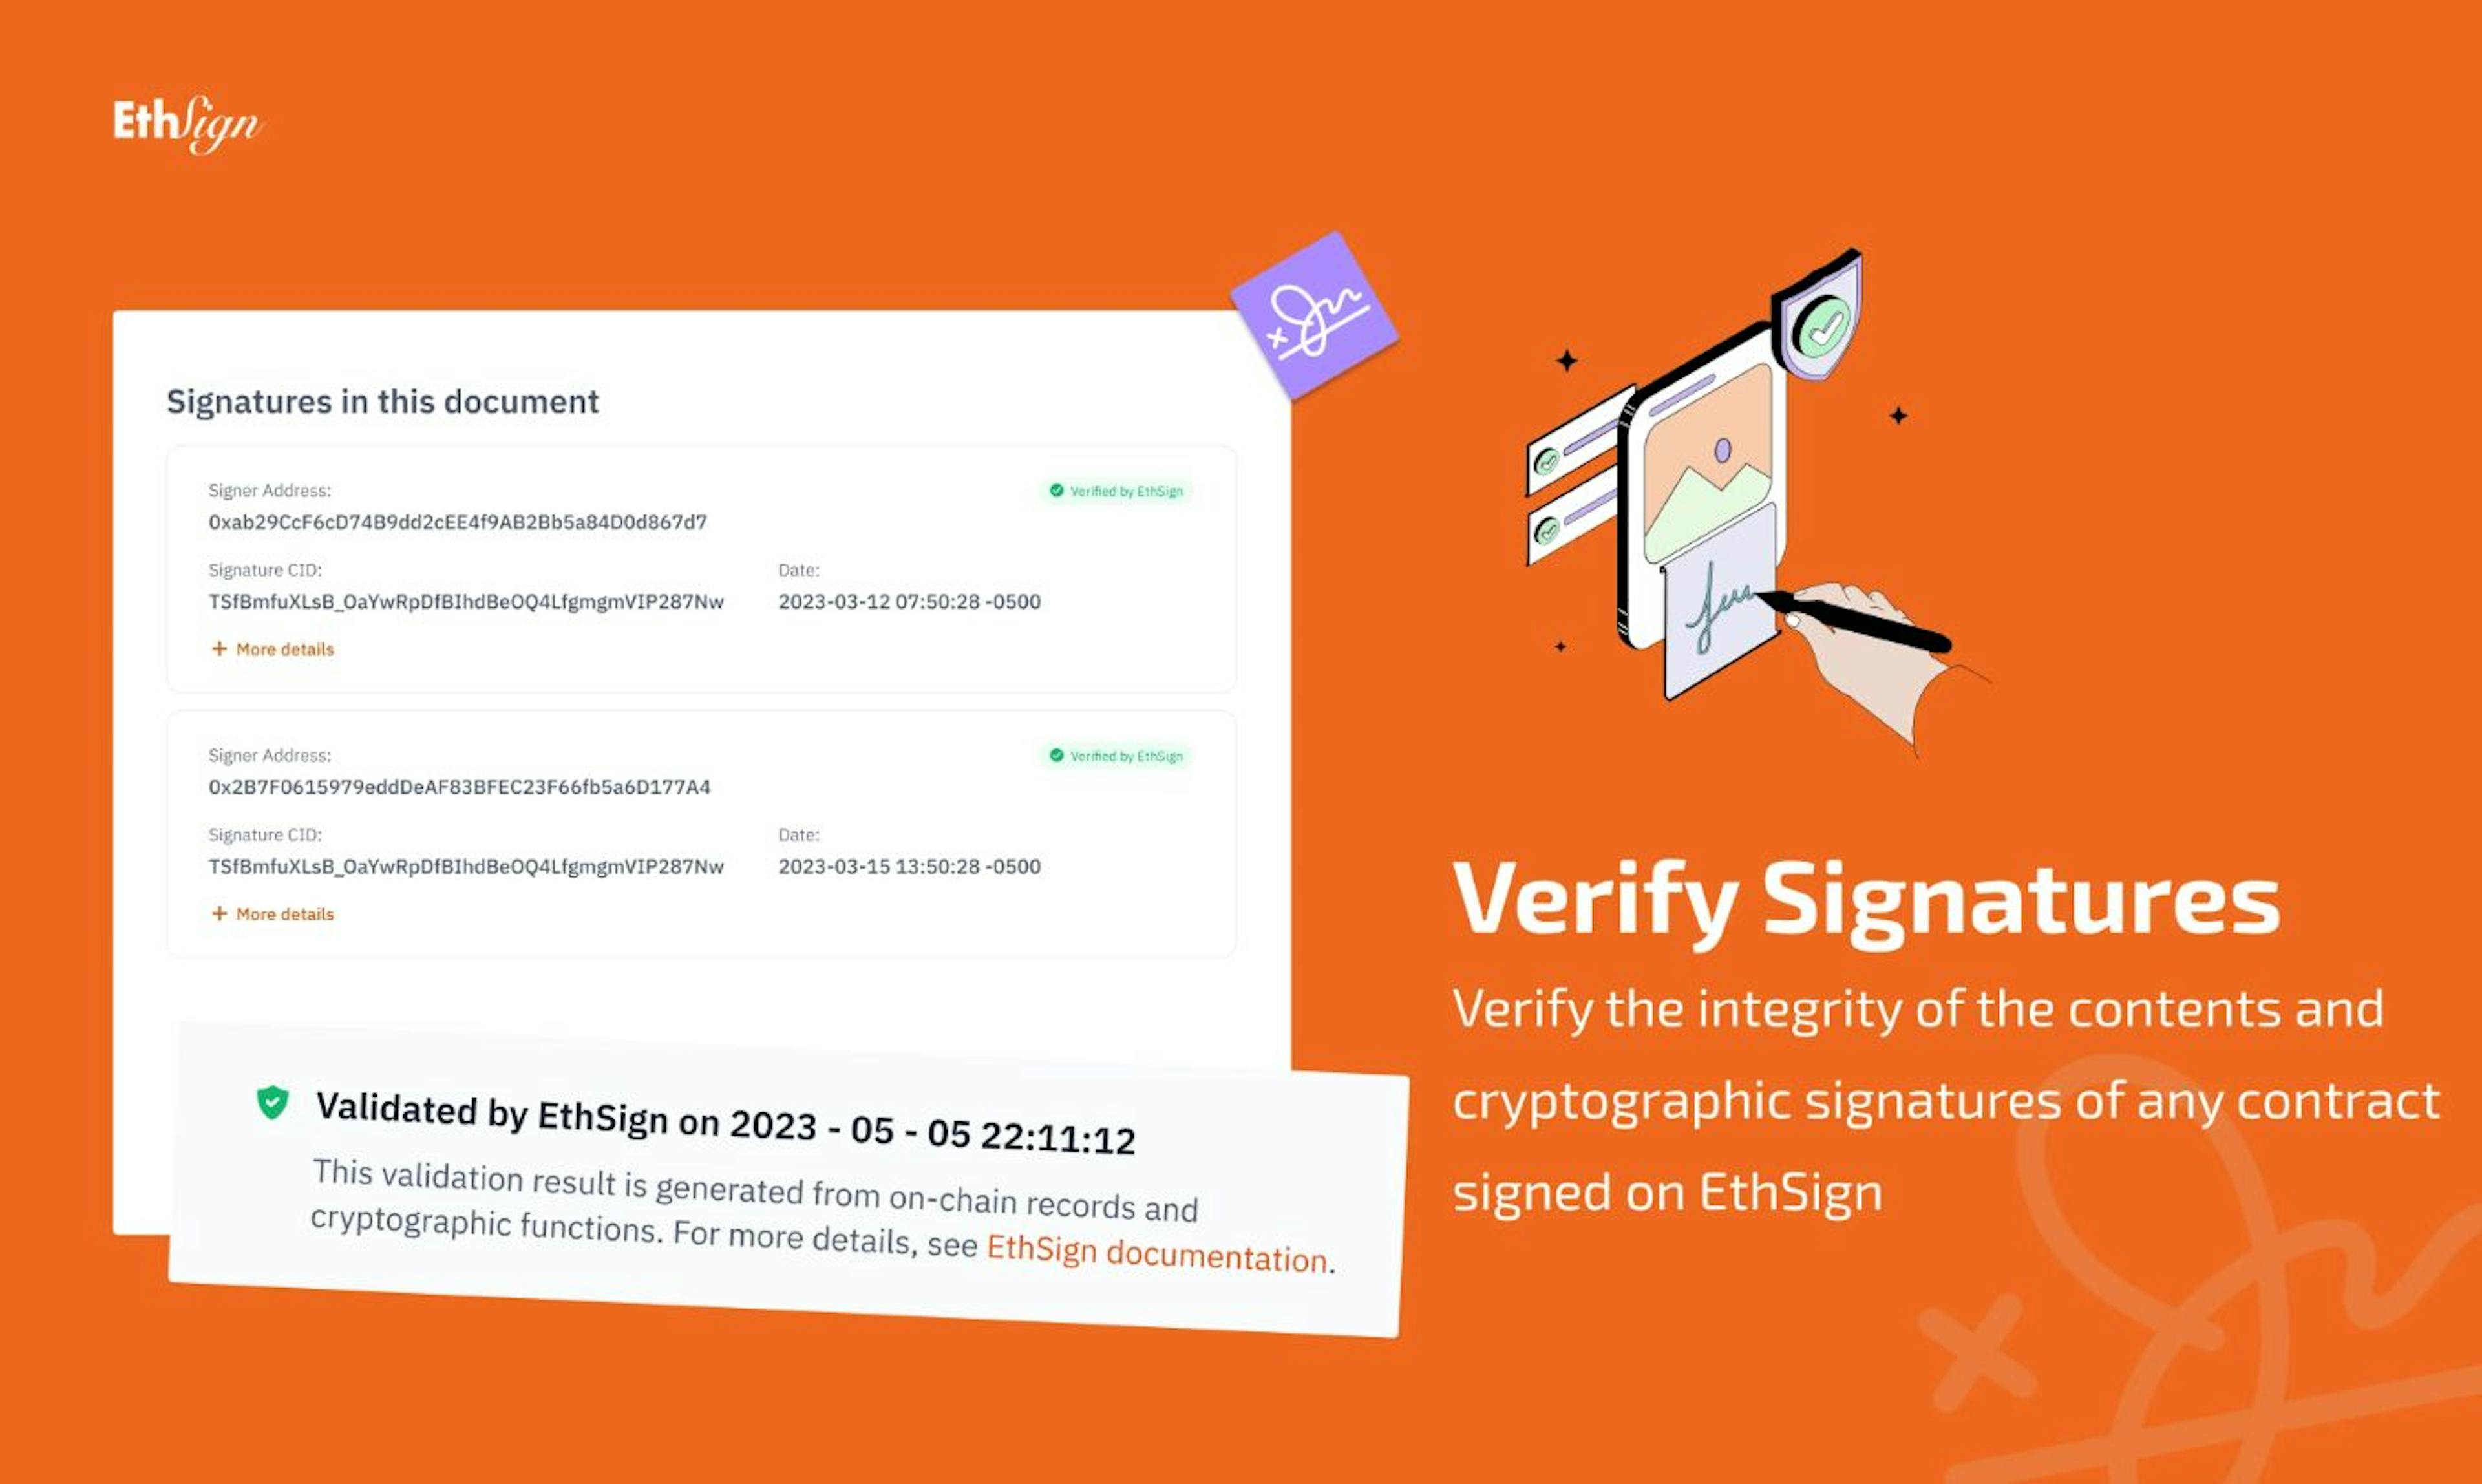 Signature verification is now available at app.ethsign.xyz/verify.